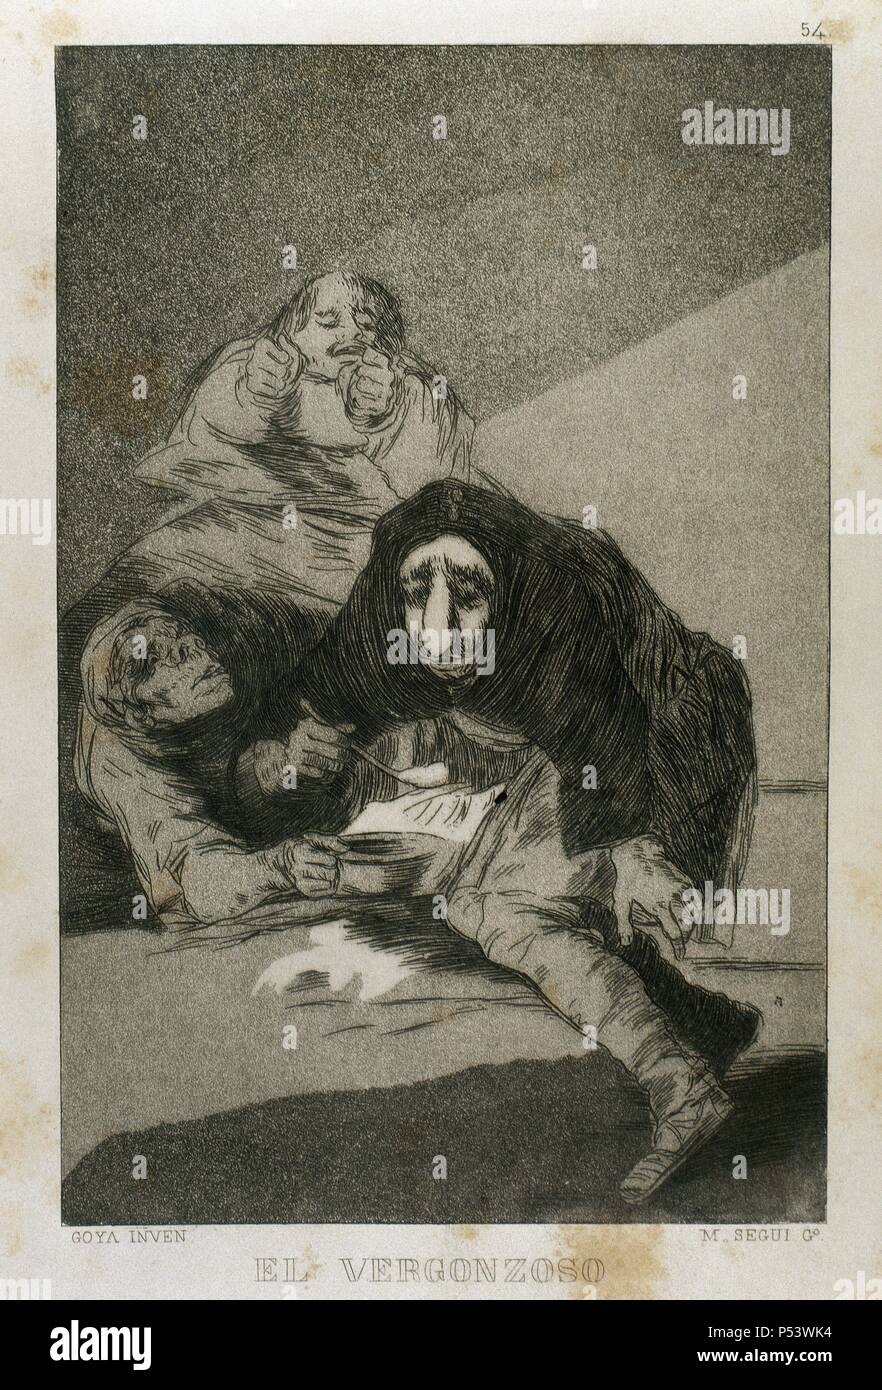 Francisco de Goya (1746-1828). Spanish painter and printmaker. Los Caprichos. El Vergonzoso (The Shameful). Number 54. Aquatint. 1799. Reproduction by M. Segui i Riera. Stock Photo